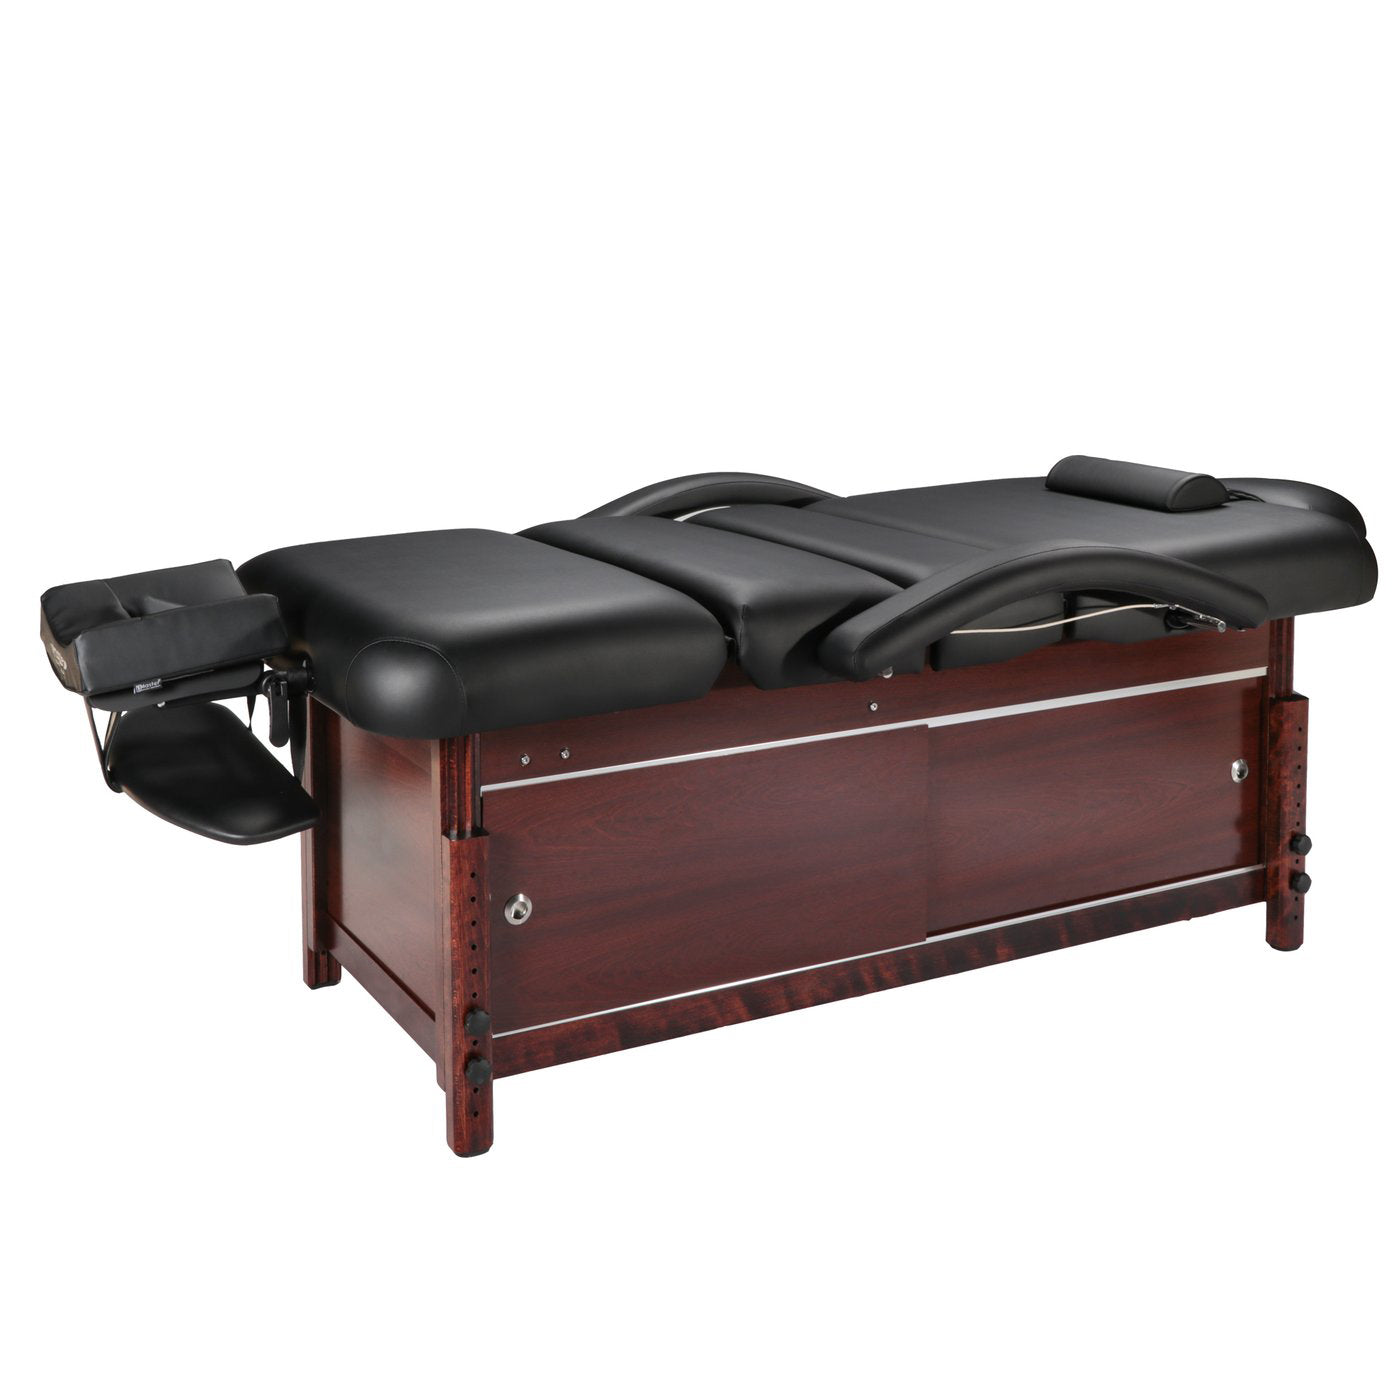 Spabodega 30" Cabrillo Stationary Massage Table